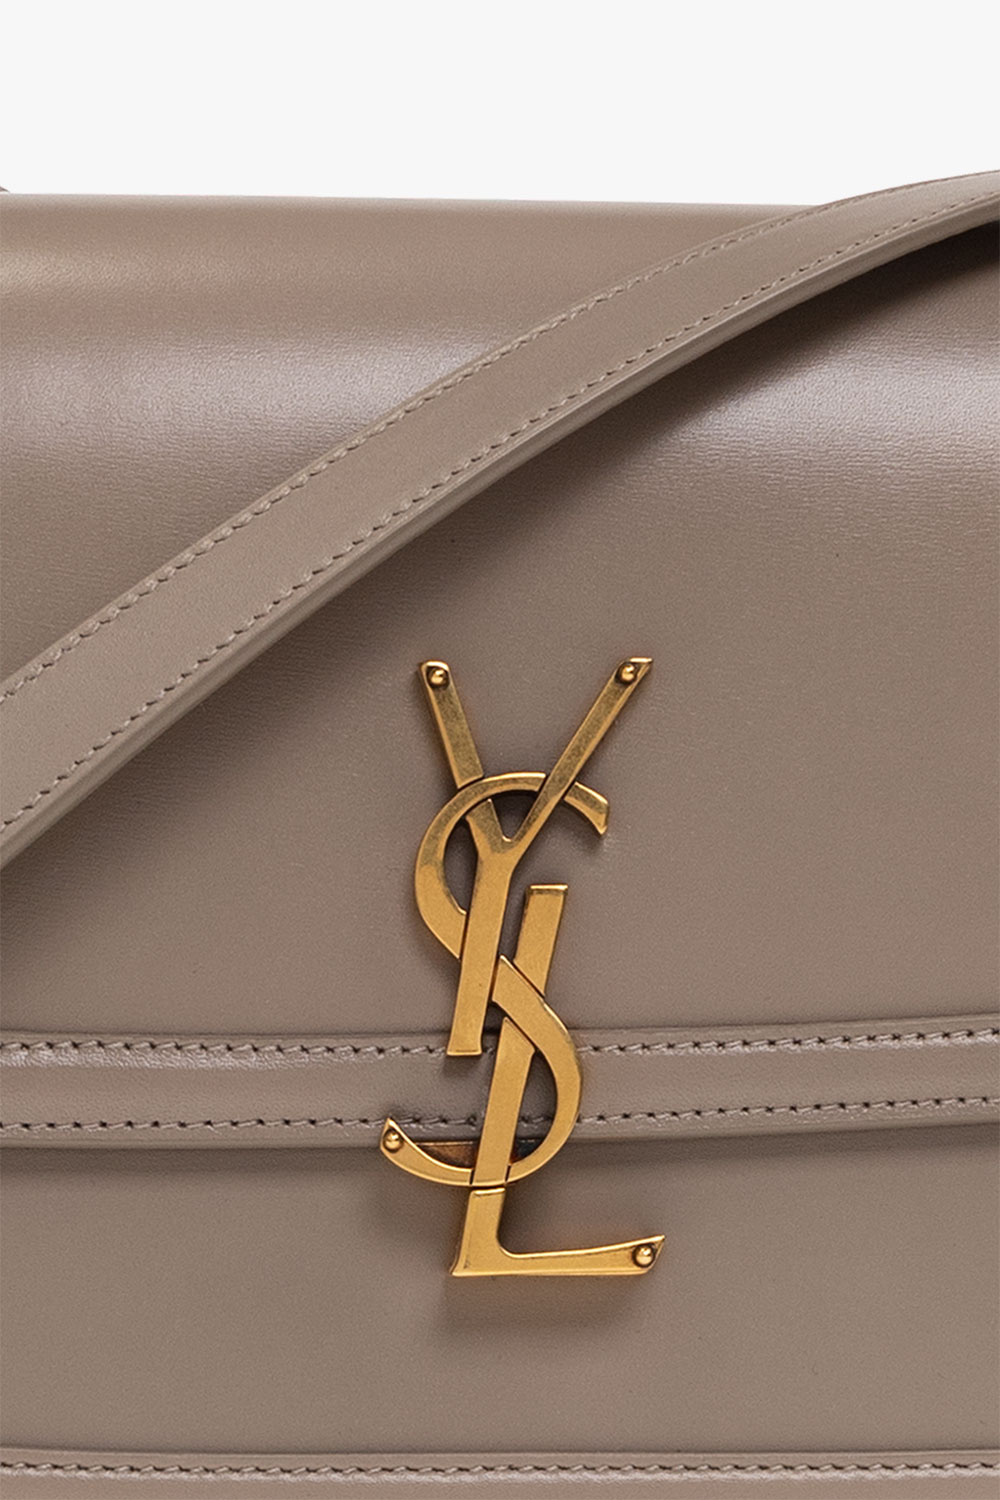 Grey 'Sunset Medium' shoulder bag Saint Laurent - Vitkac KR